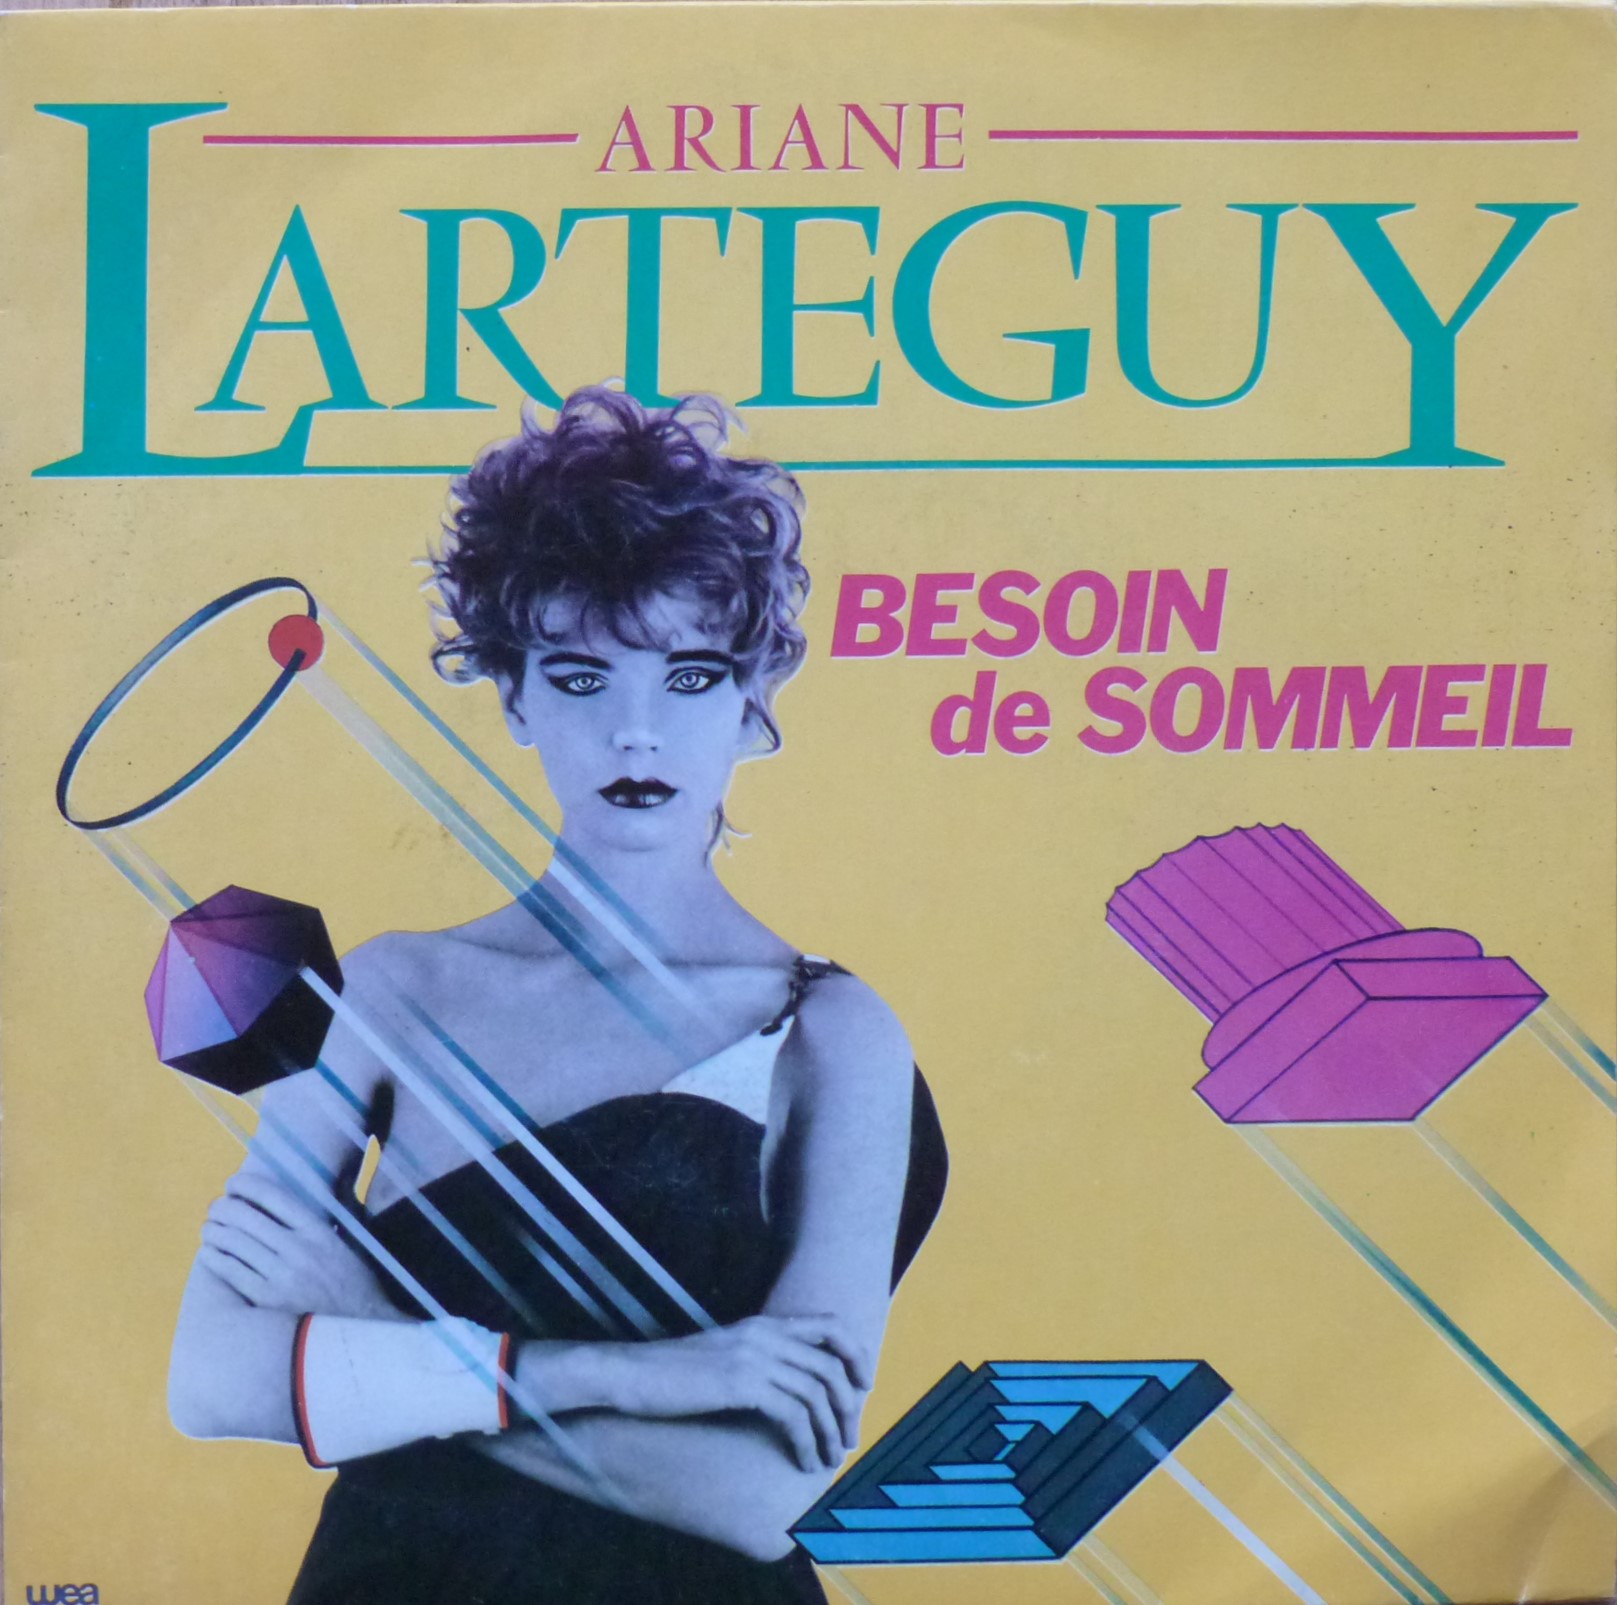 Ariane Larteguy